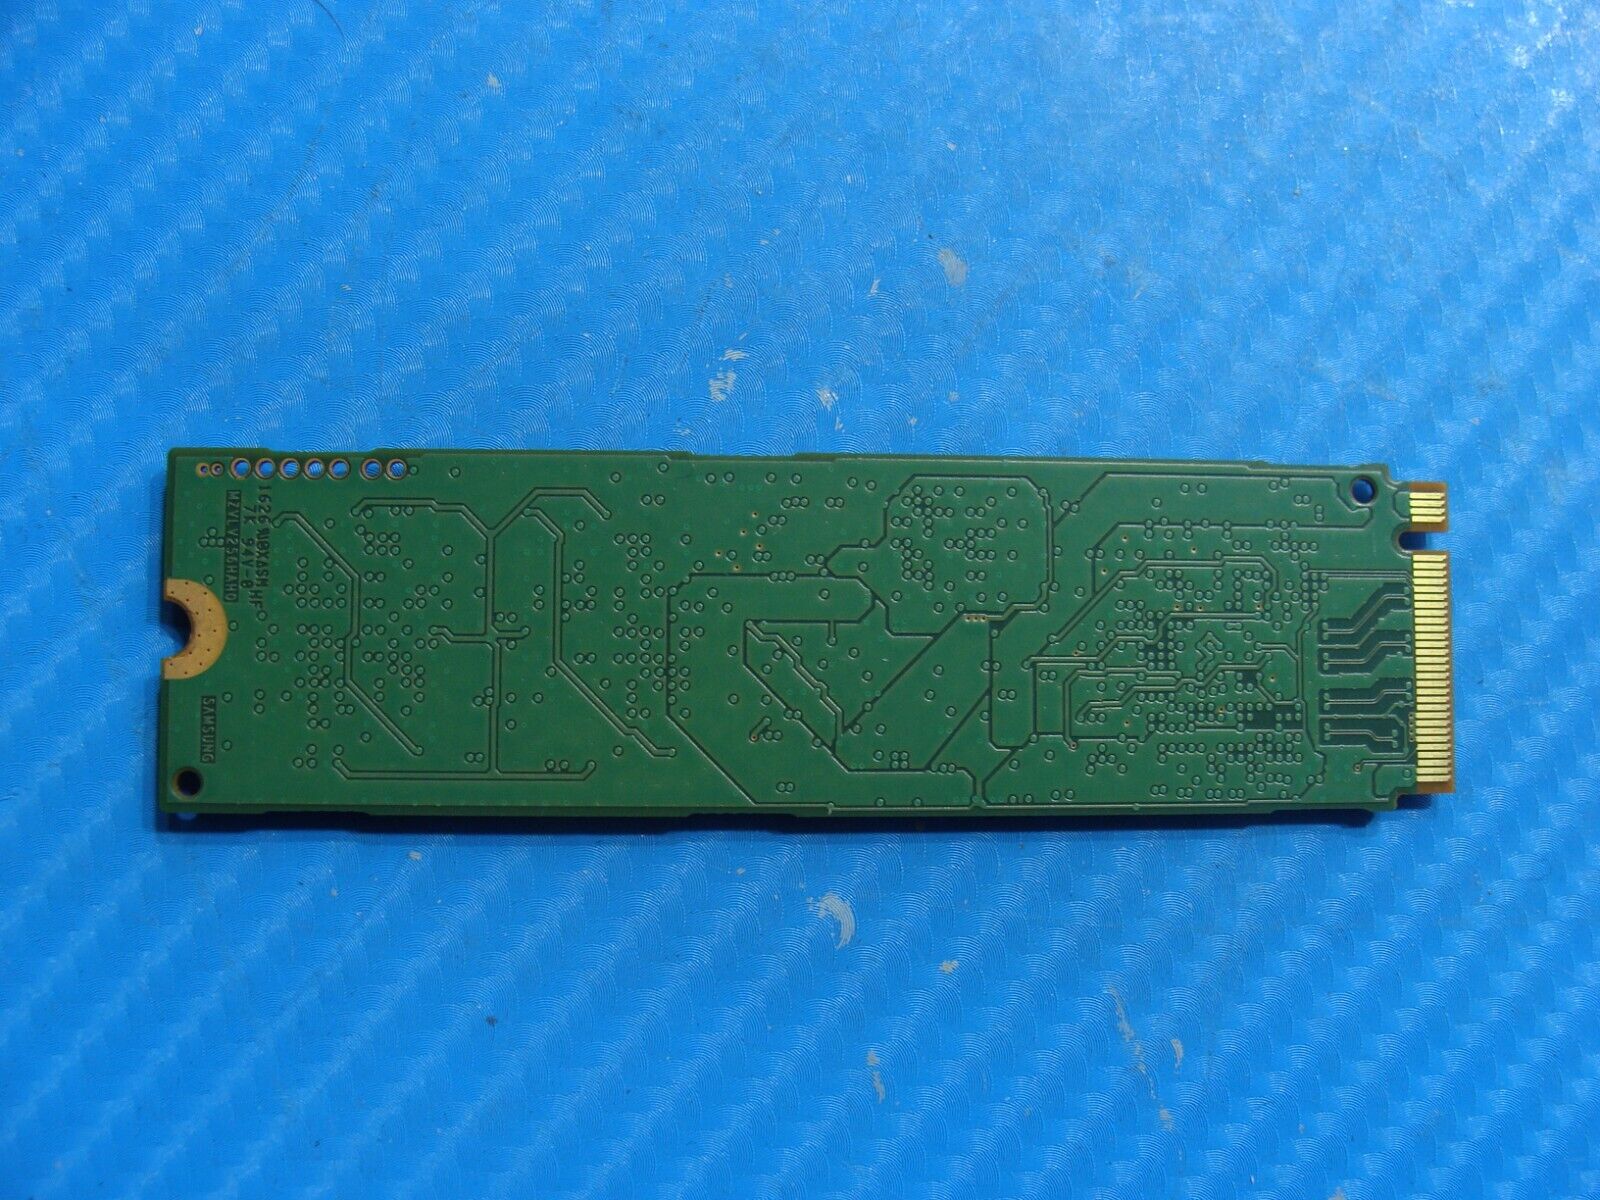 Razer Blade RZ09-0196 Samsung 256GB NVMe M.2 SSD Solid State Drive MZ-VLV2560